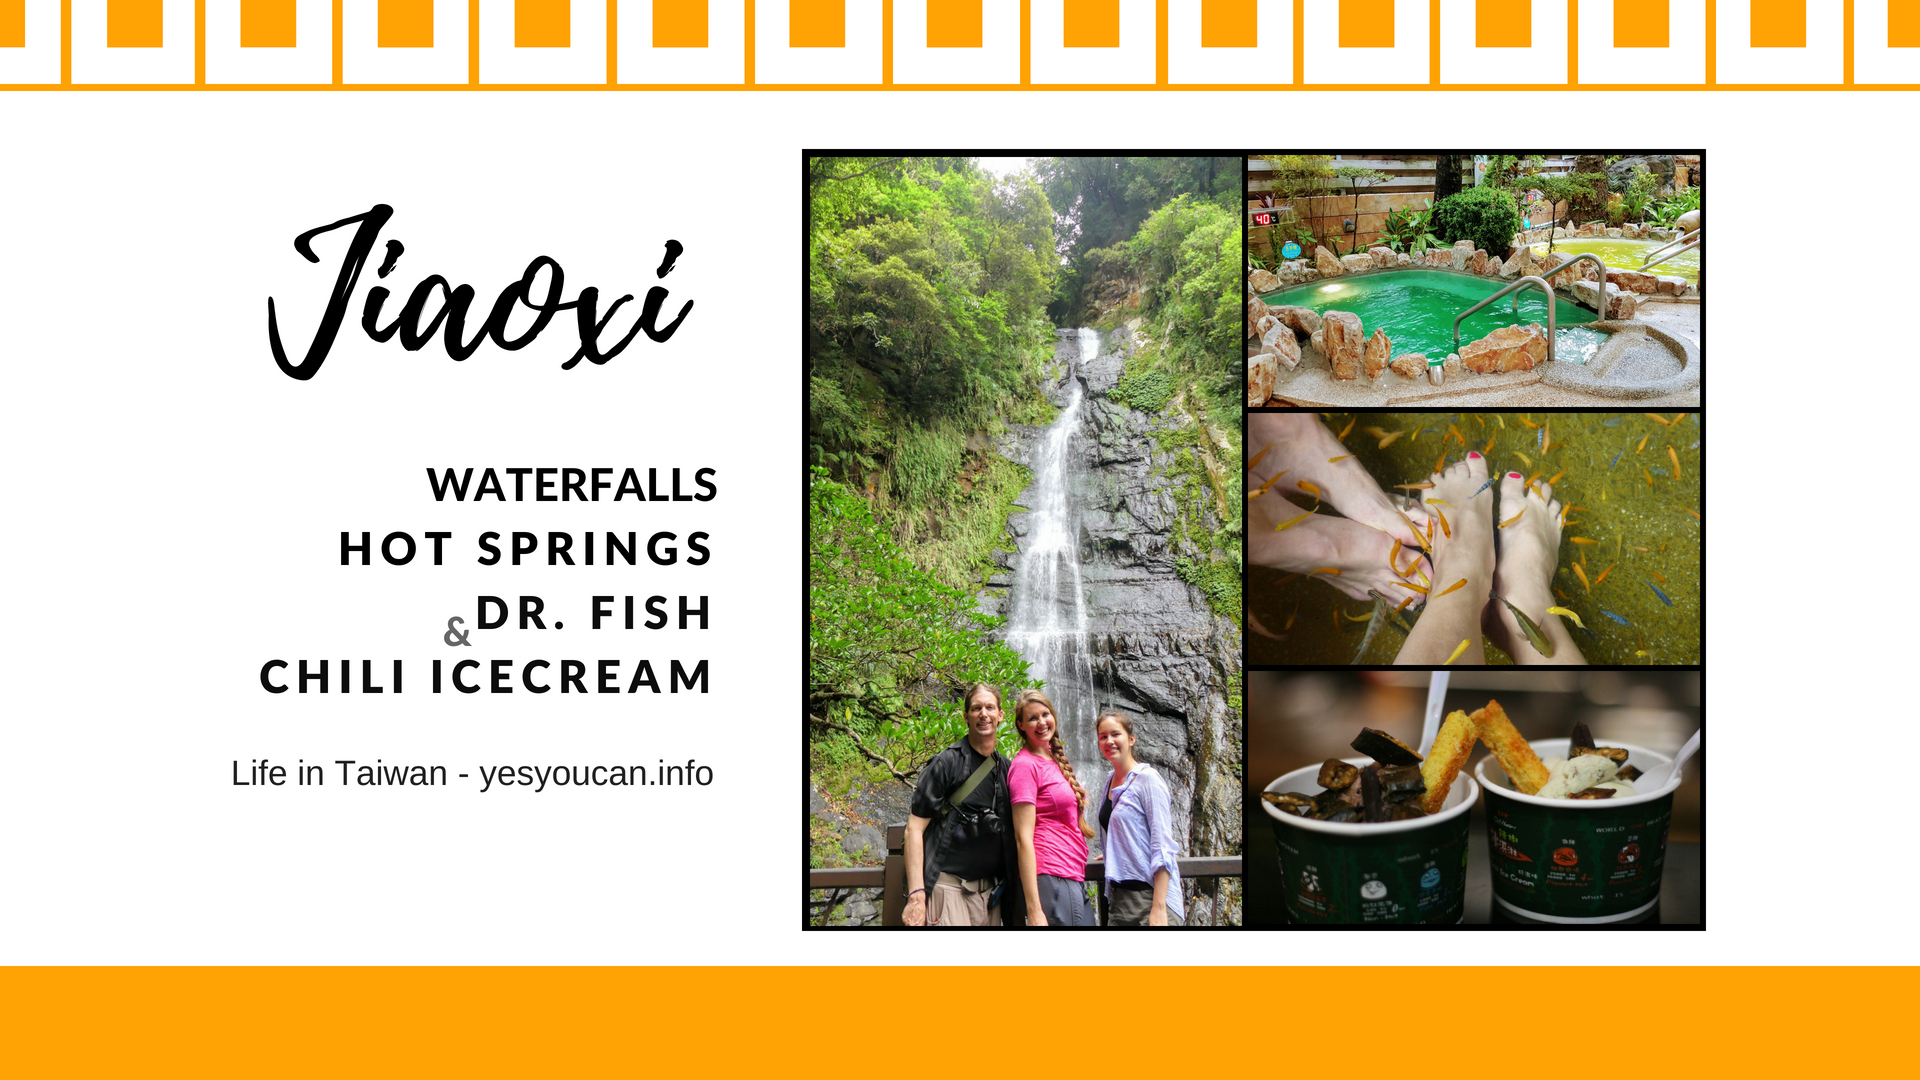 Jiaoxi: Waterfalls, Hotsprings, Dr. Fish, and Chili Icecream!